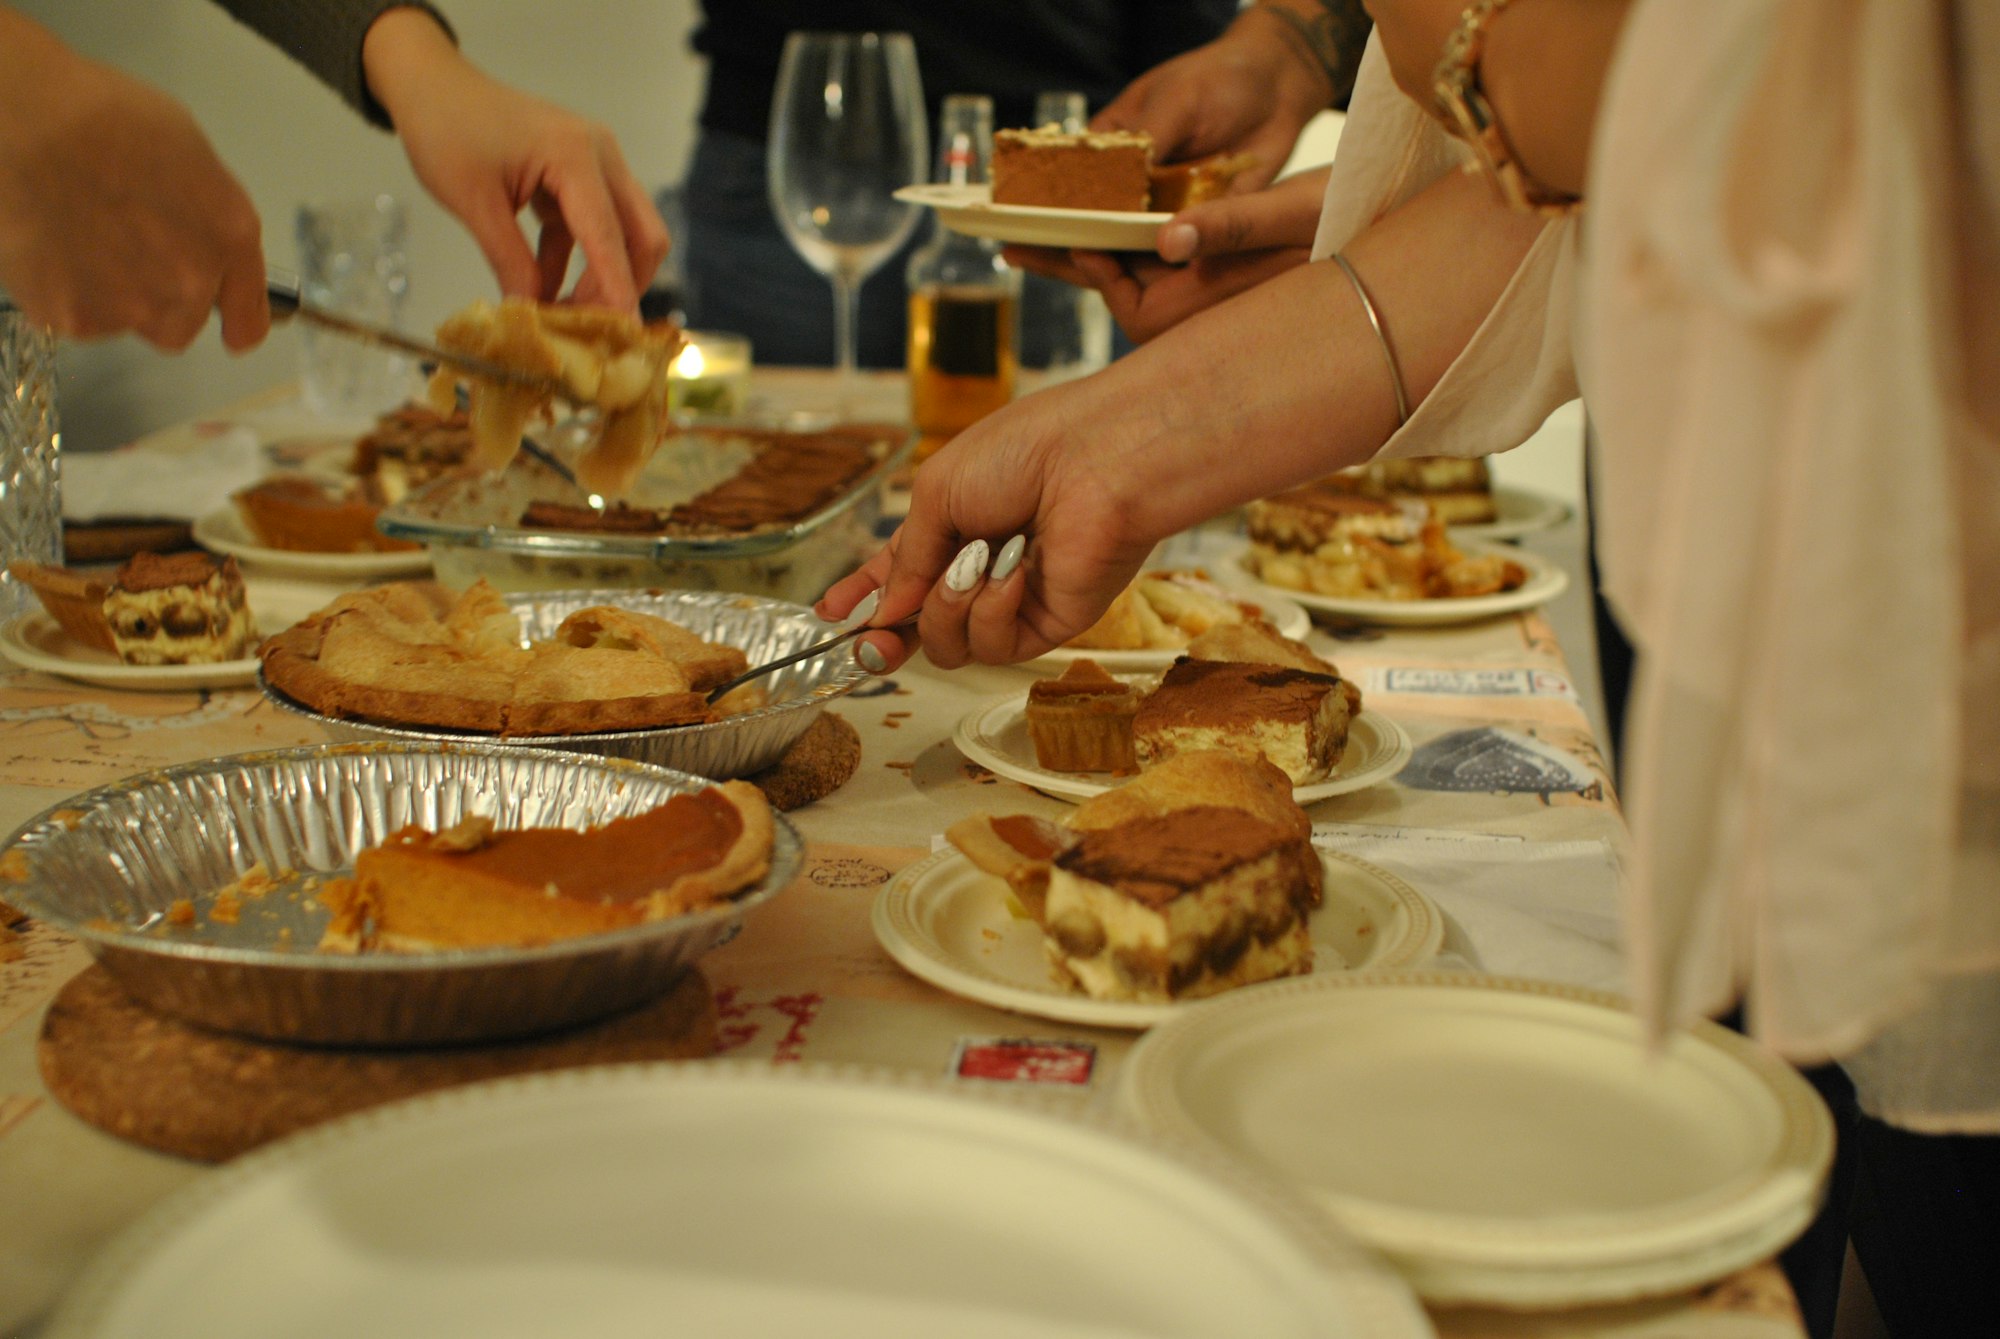 Diner, Feast, Celebration
Thanksgiving 2028
Desert time…
We are having pumpkin pie and tiramisu